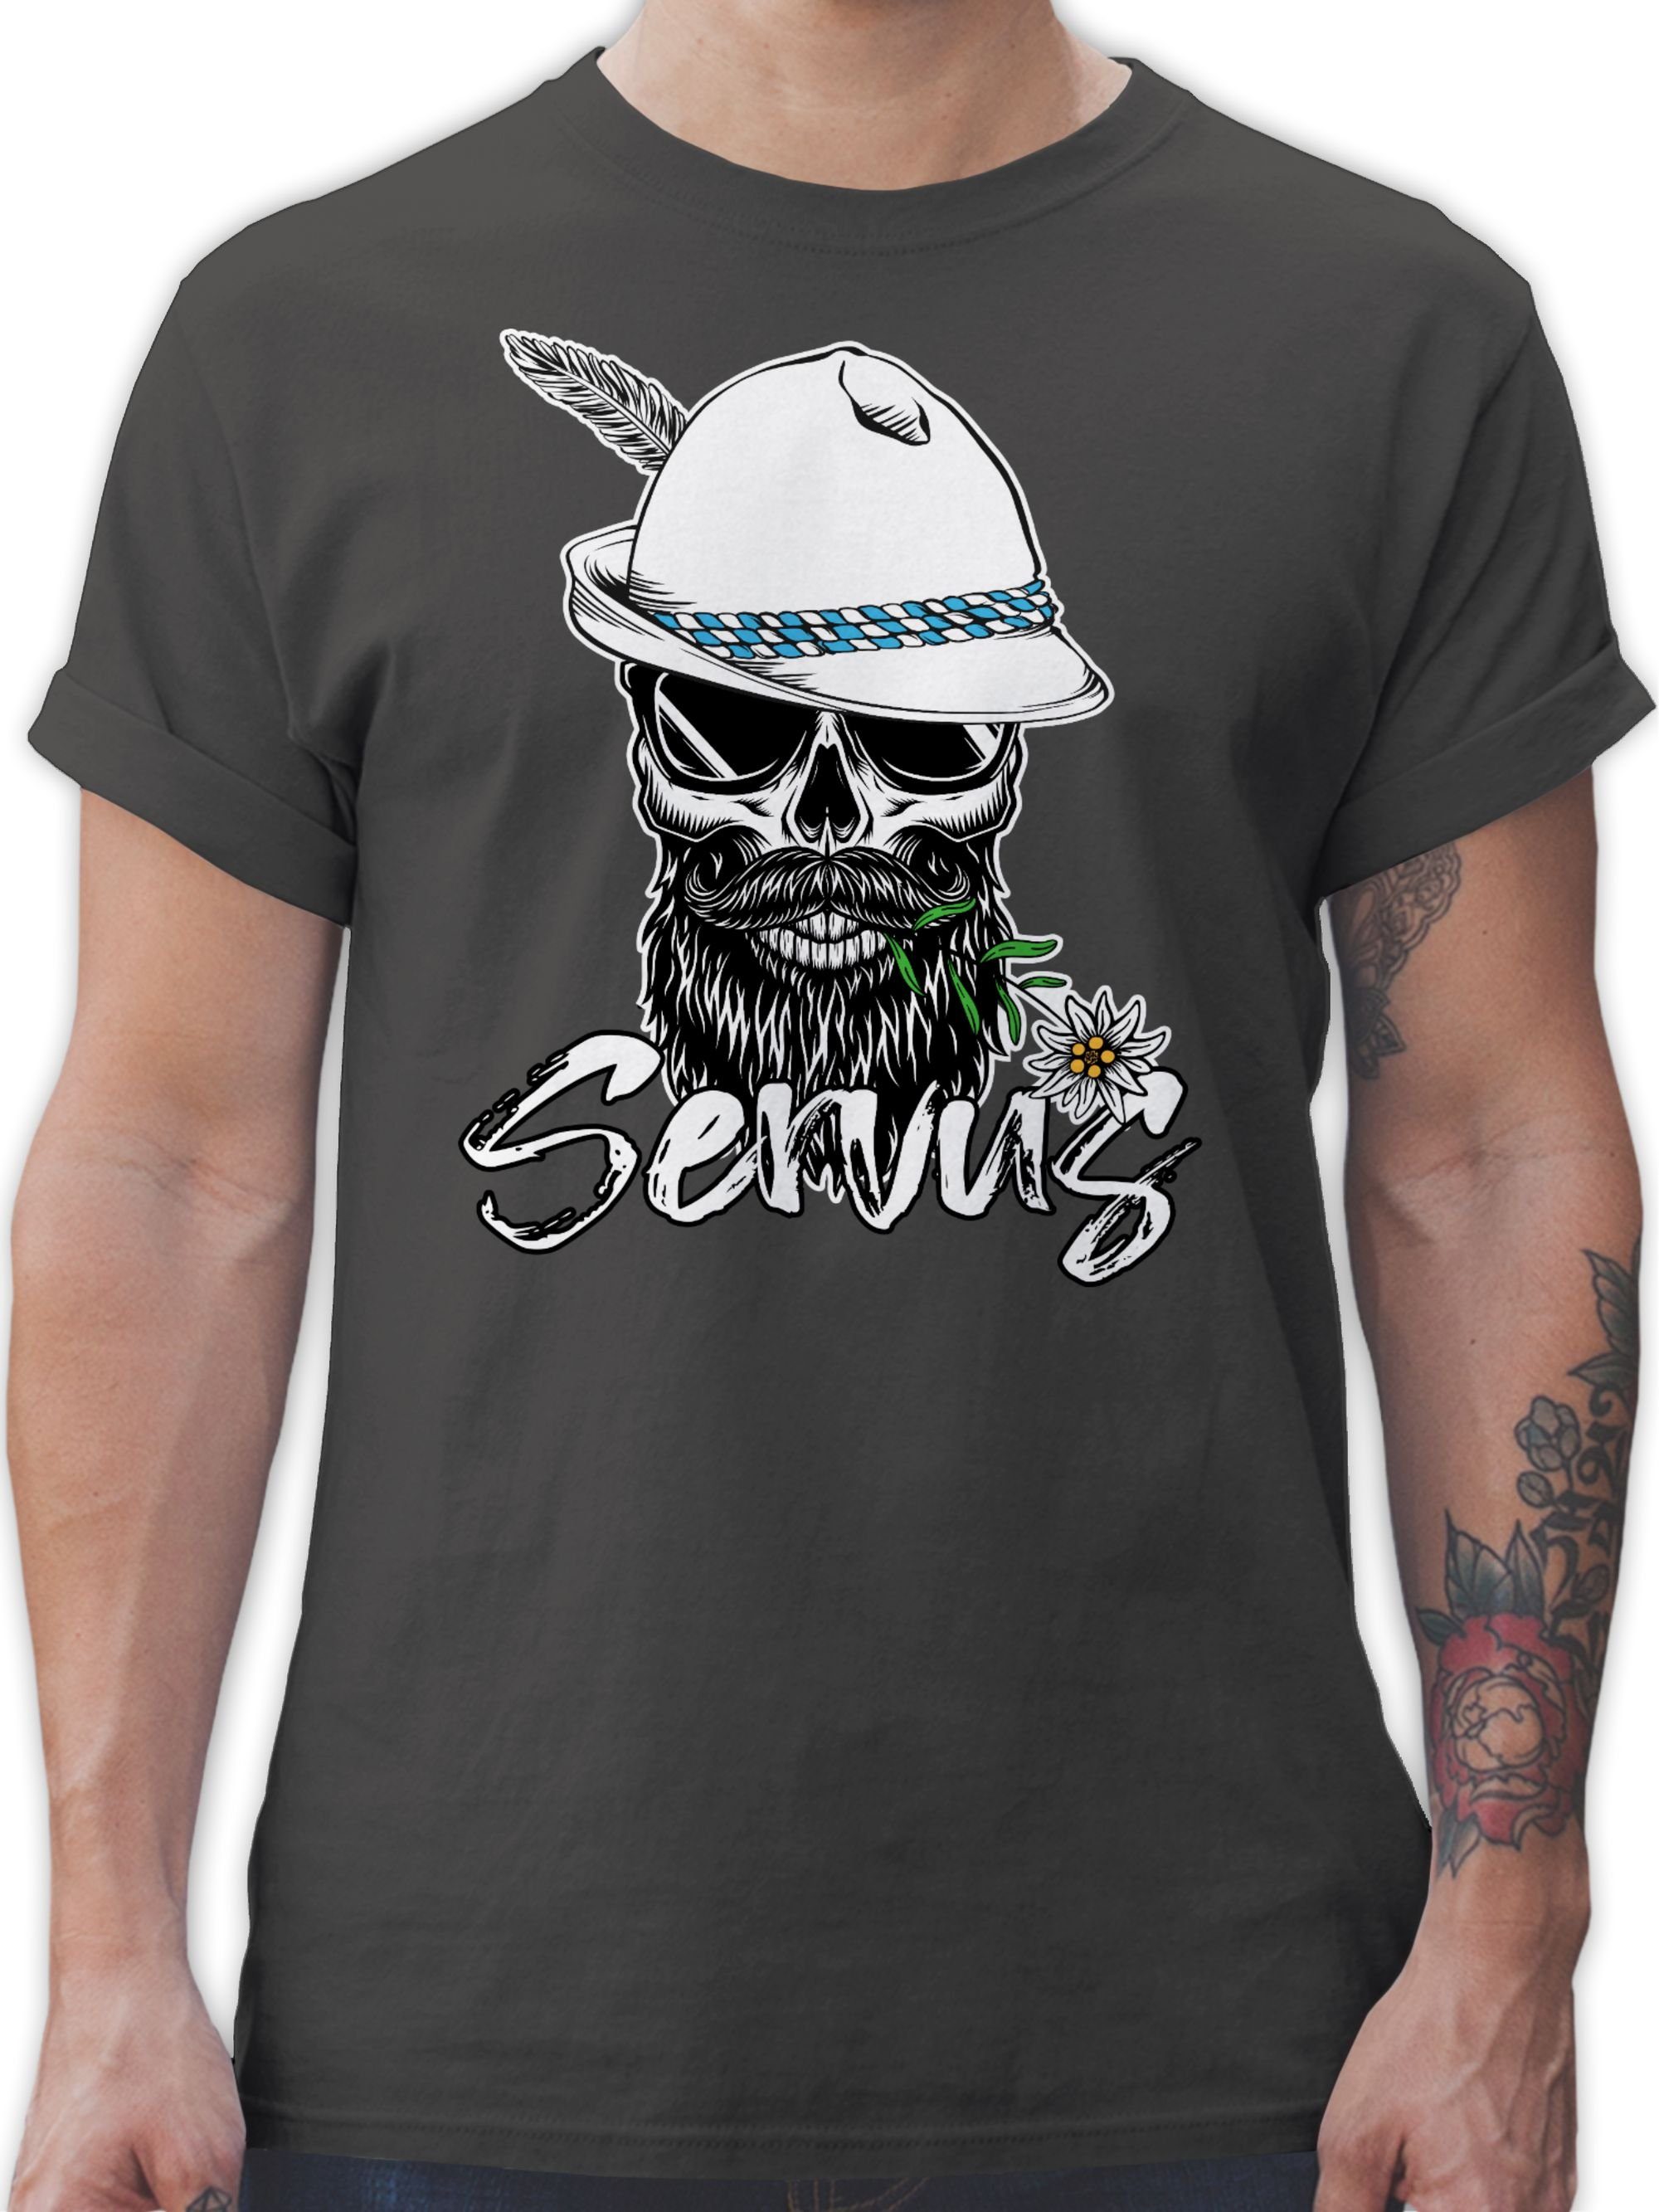 Shirtracer T-Shirt Servus Totenkopf Skull Bayrisch Mode für Oktoberfest Herren 01 Dunkelgrau | T-Shirts